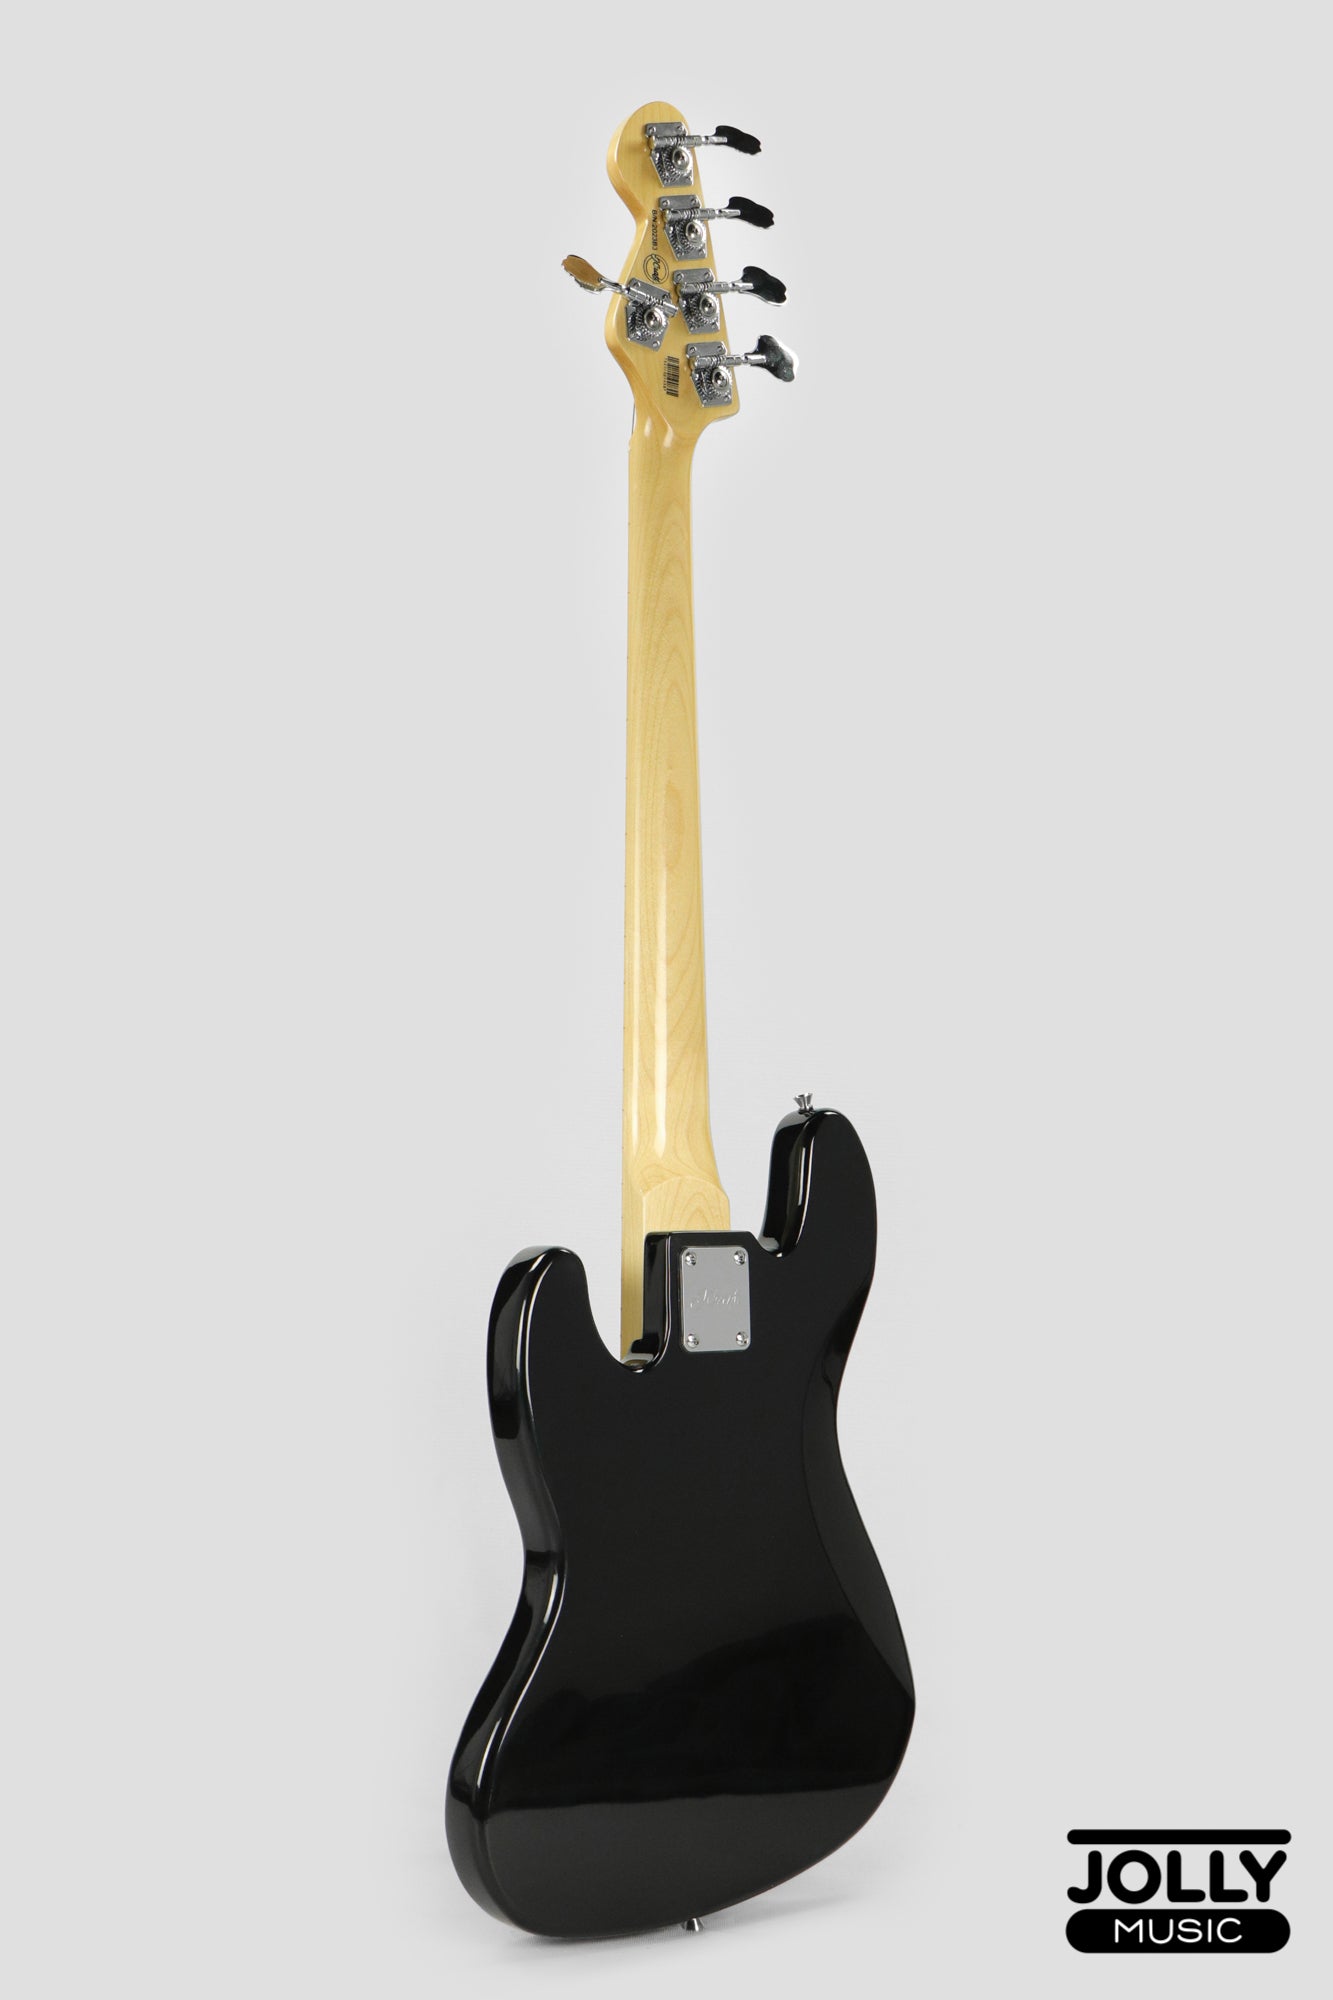 JCraft JB-1 J-Offset 5-String Bass Guitar with Gigbag - Black